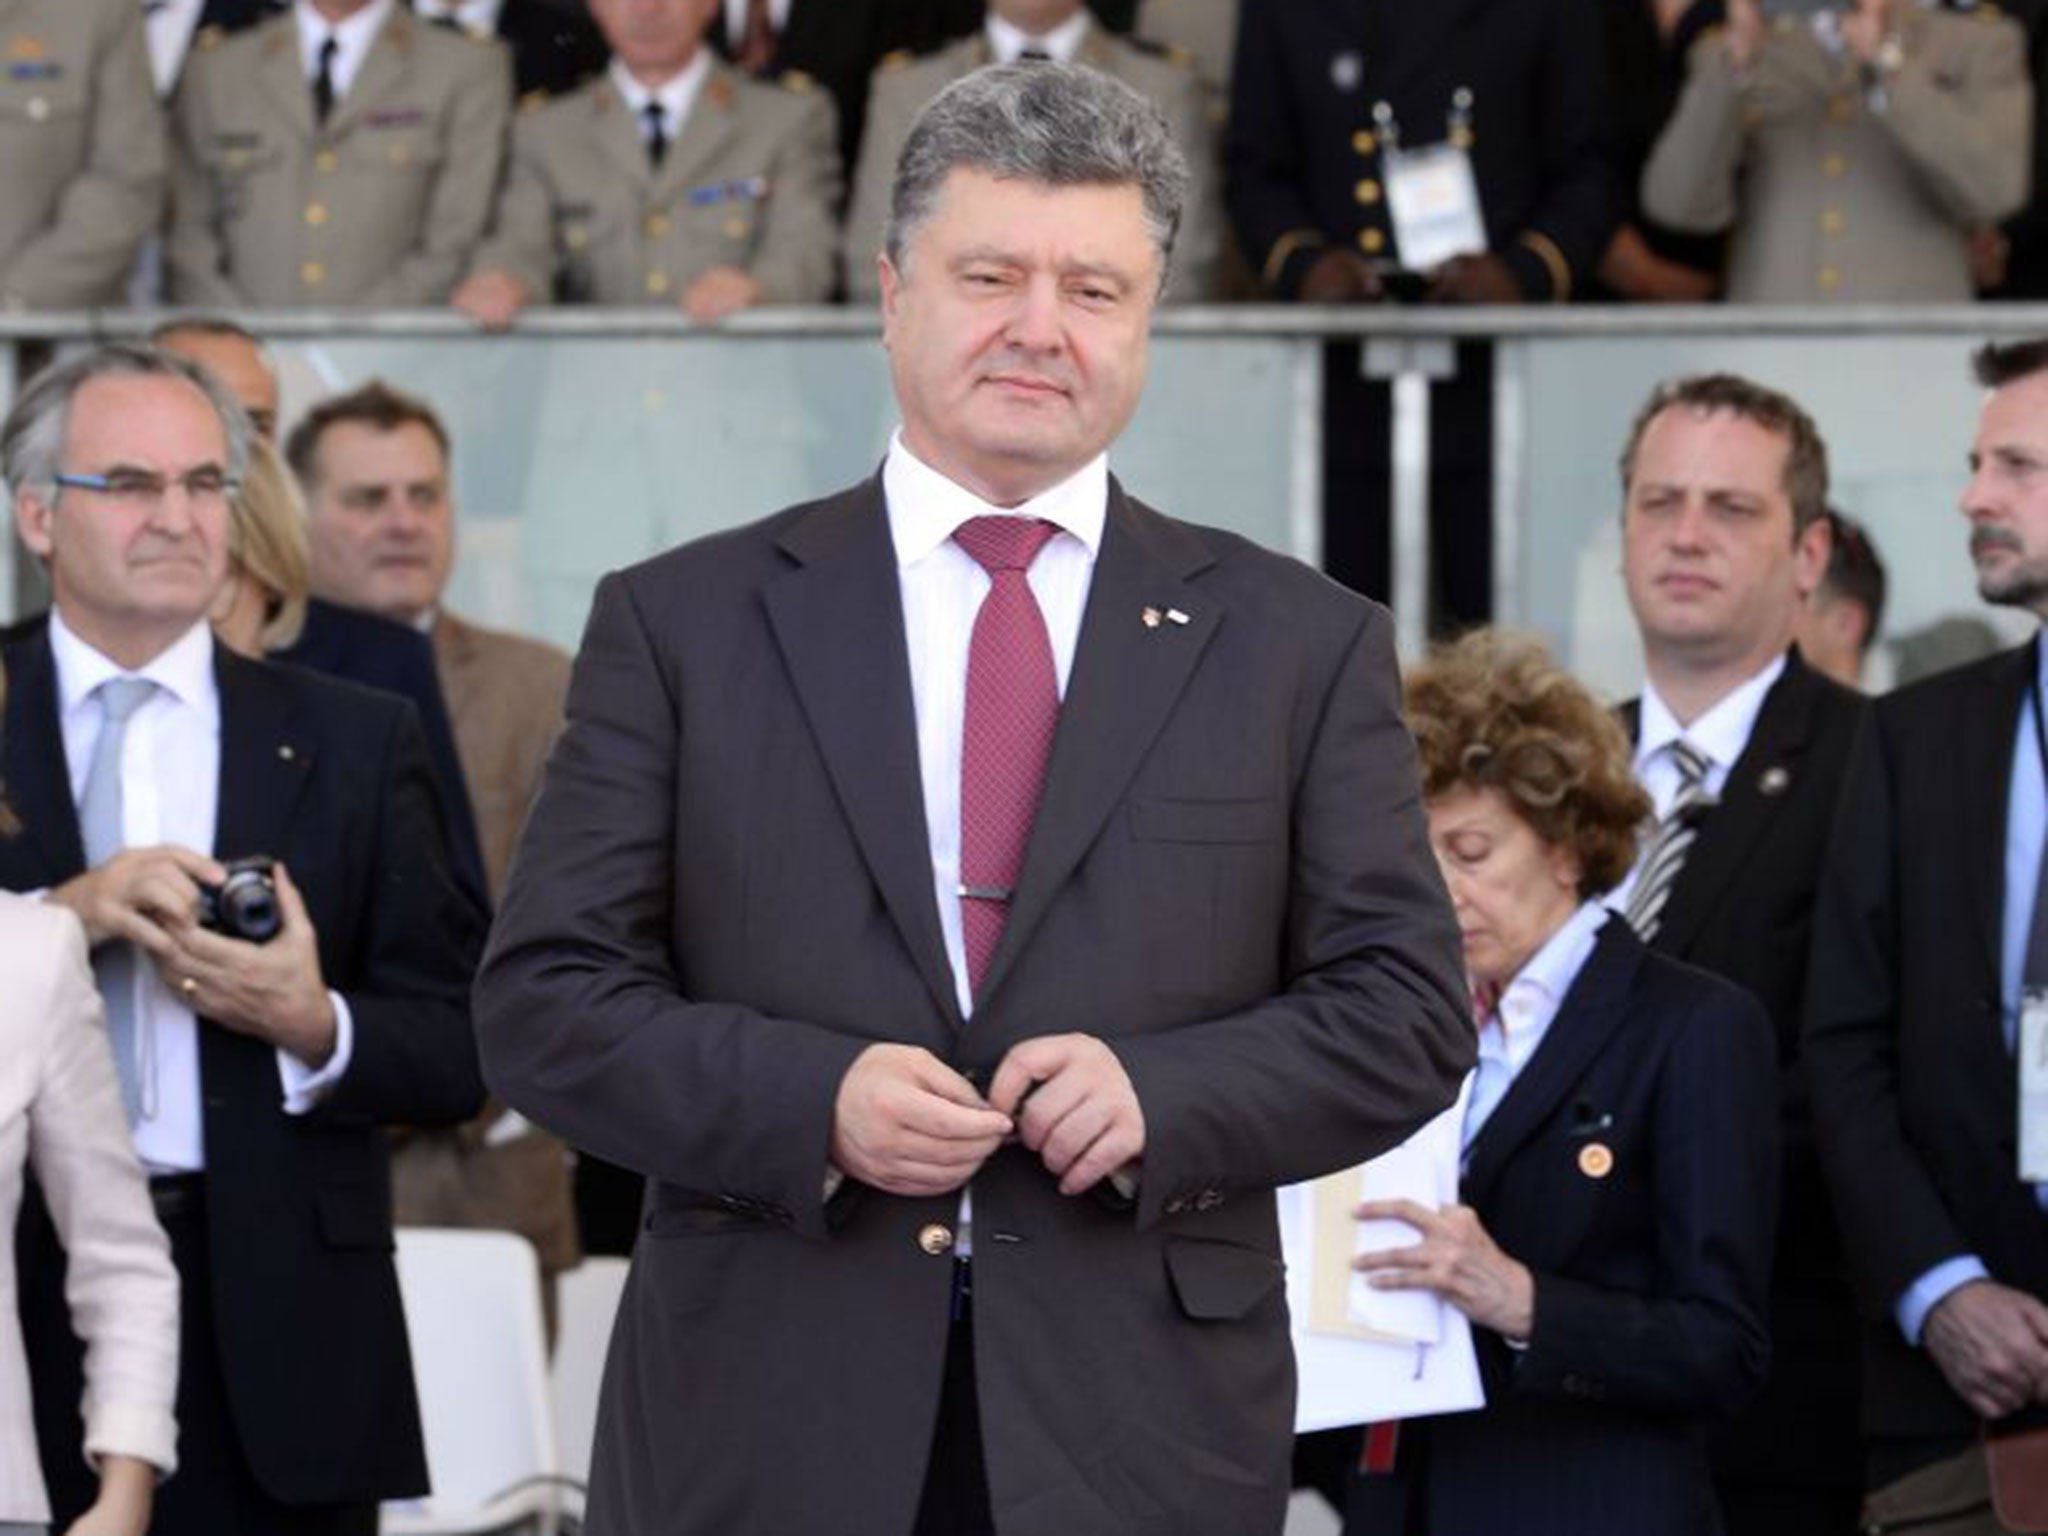 President Poroshenko was sworn in as Ukraine's new leader last weekend